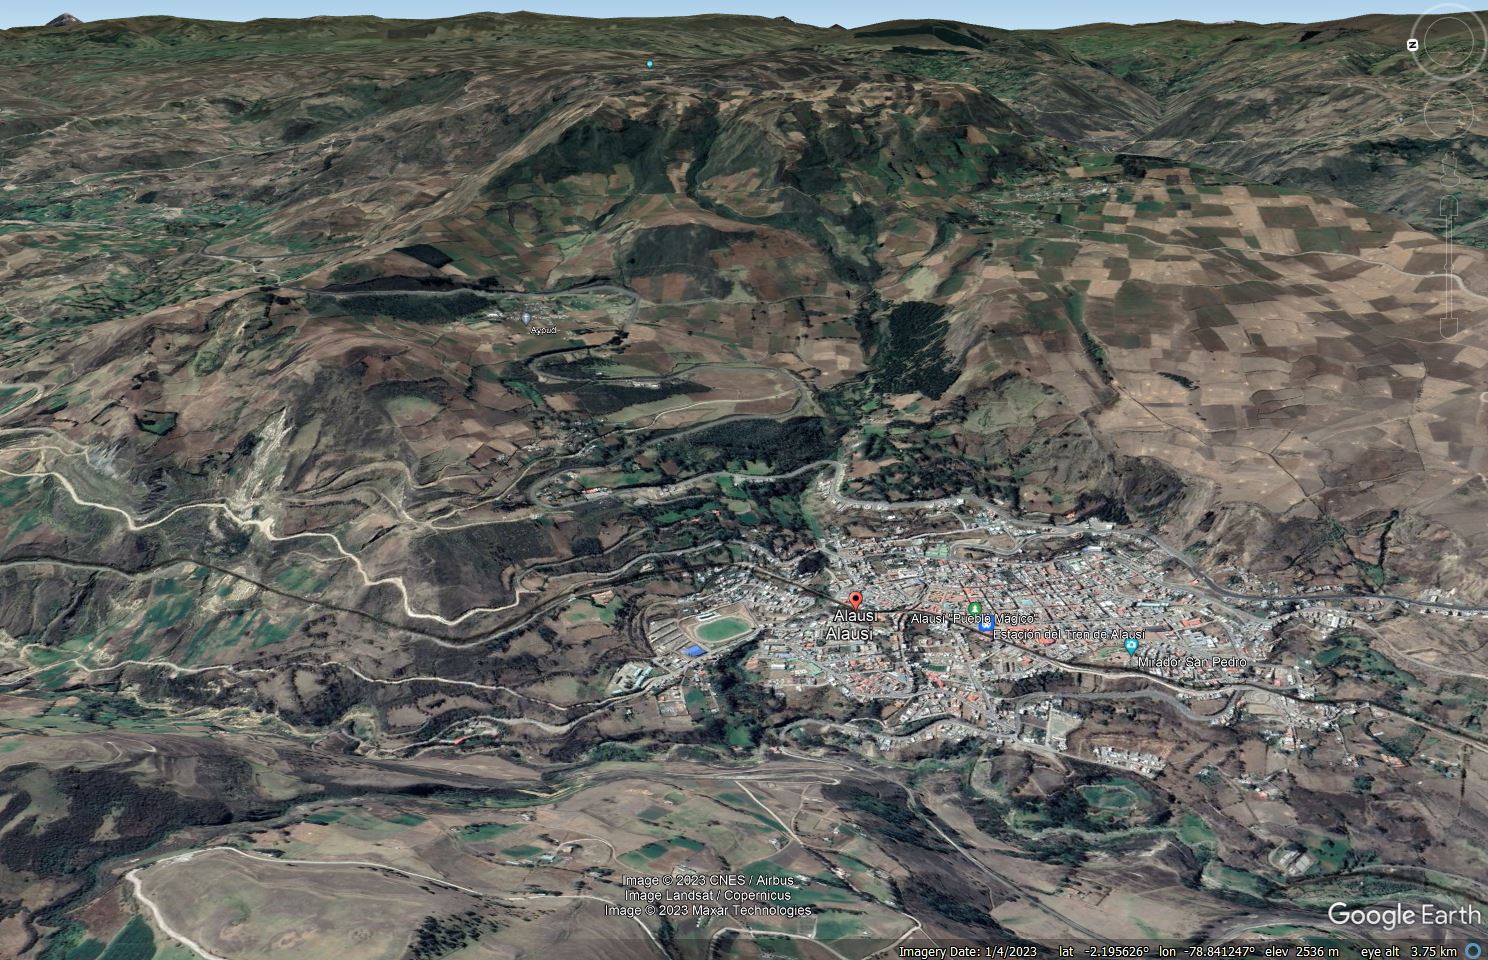 Google Earth image of the landscape around Alausí in Ecuador.